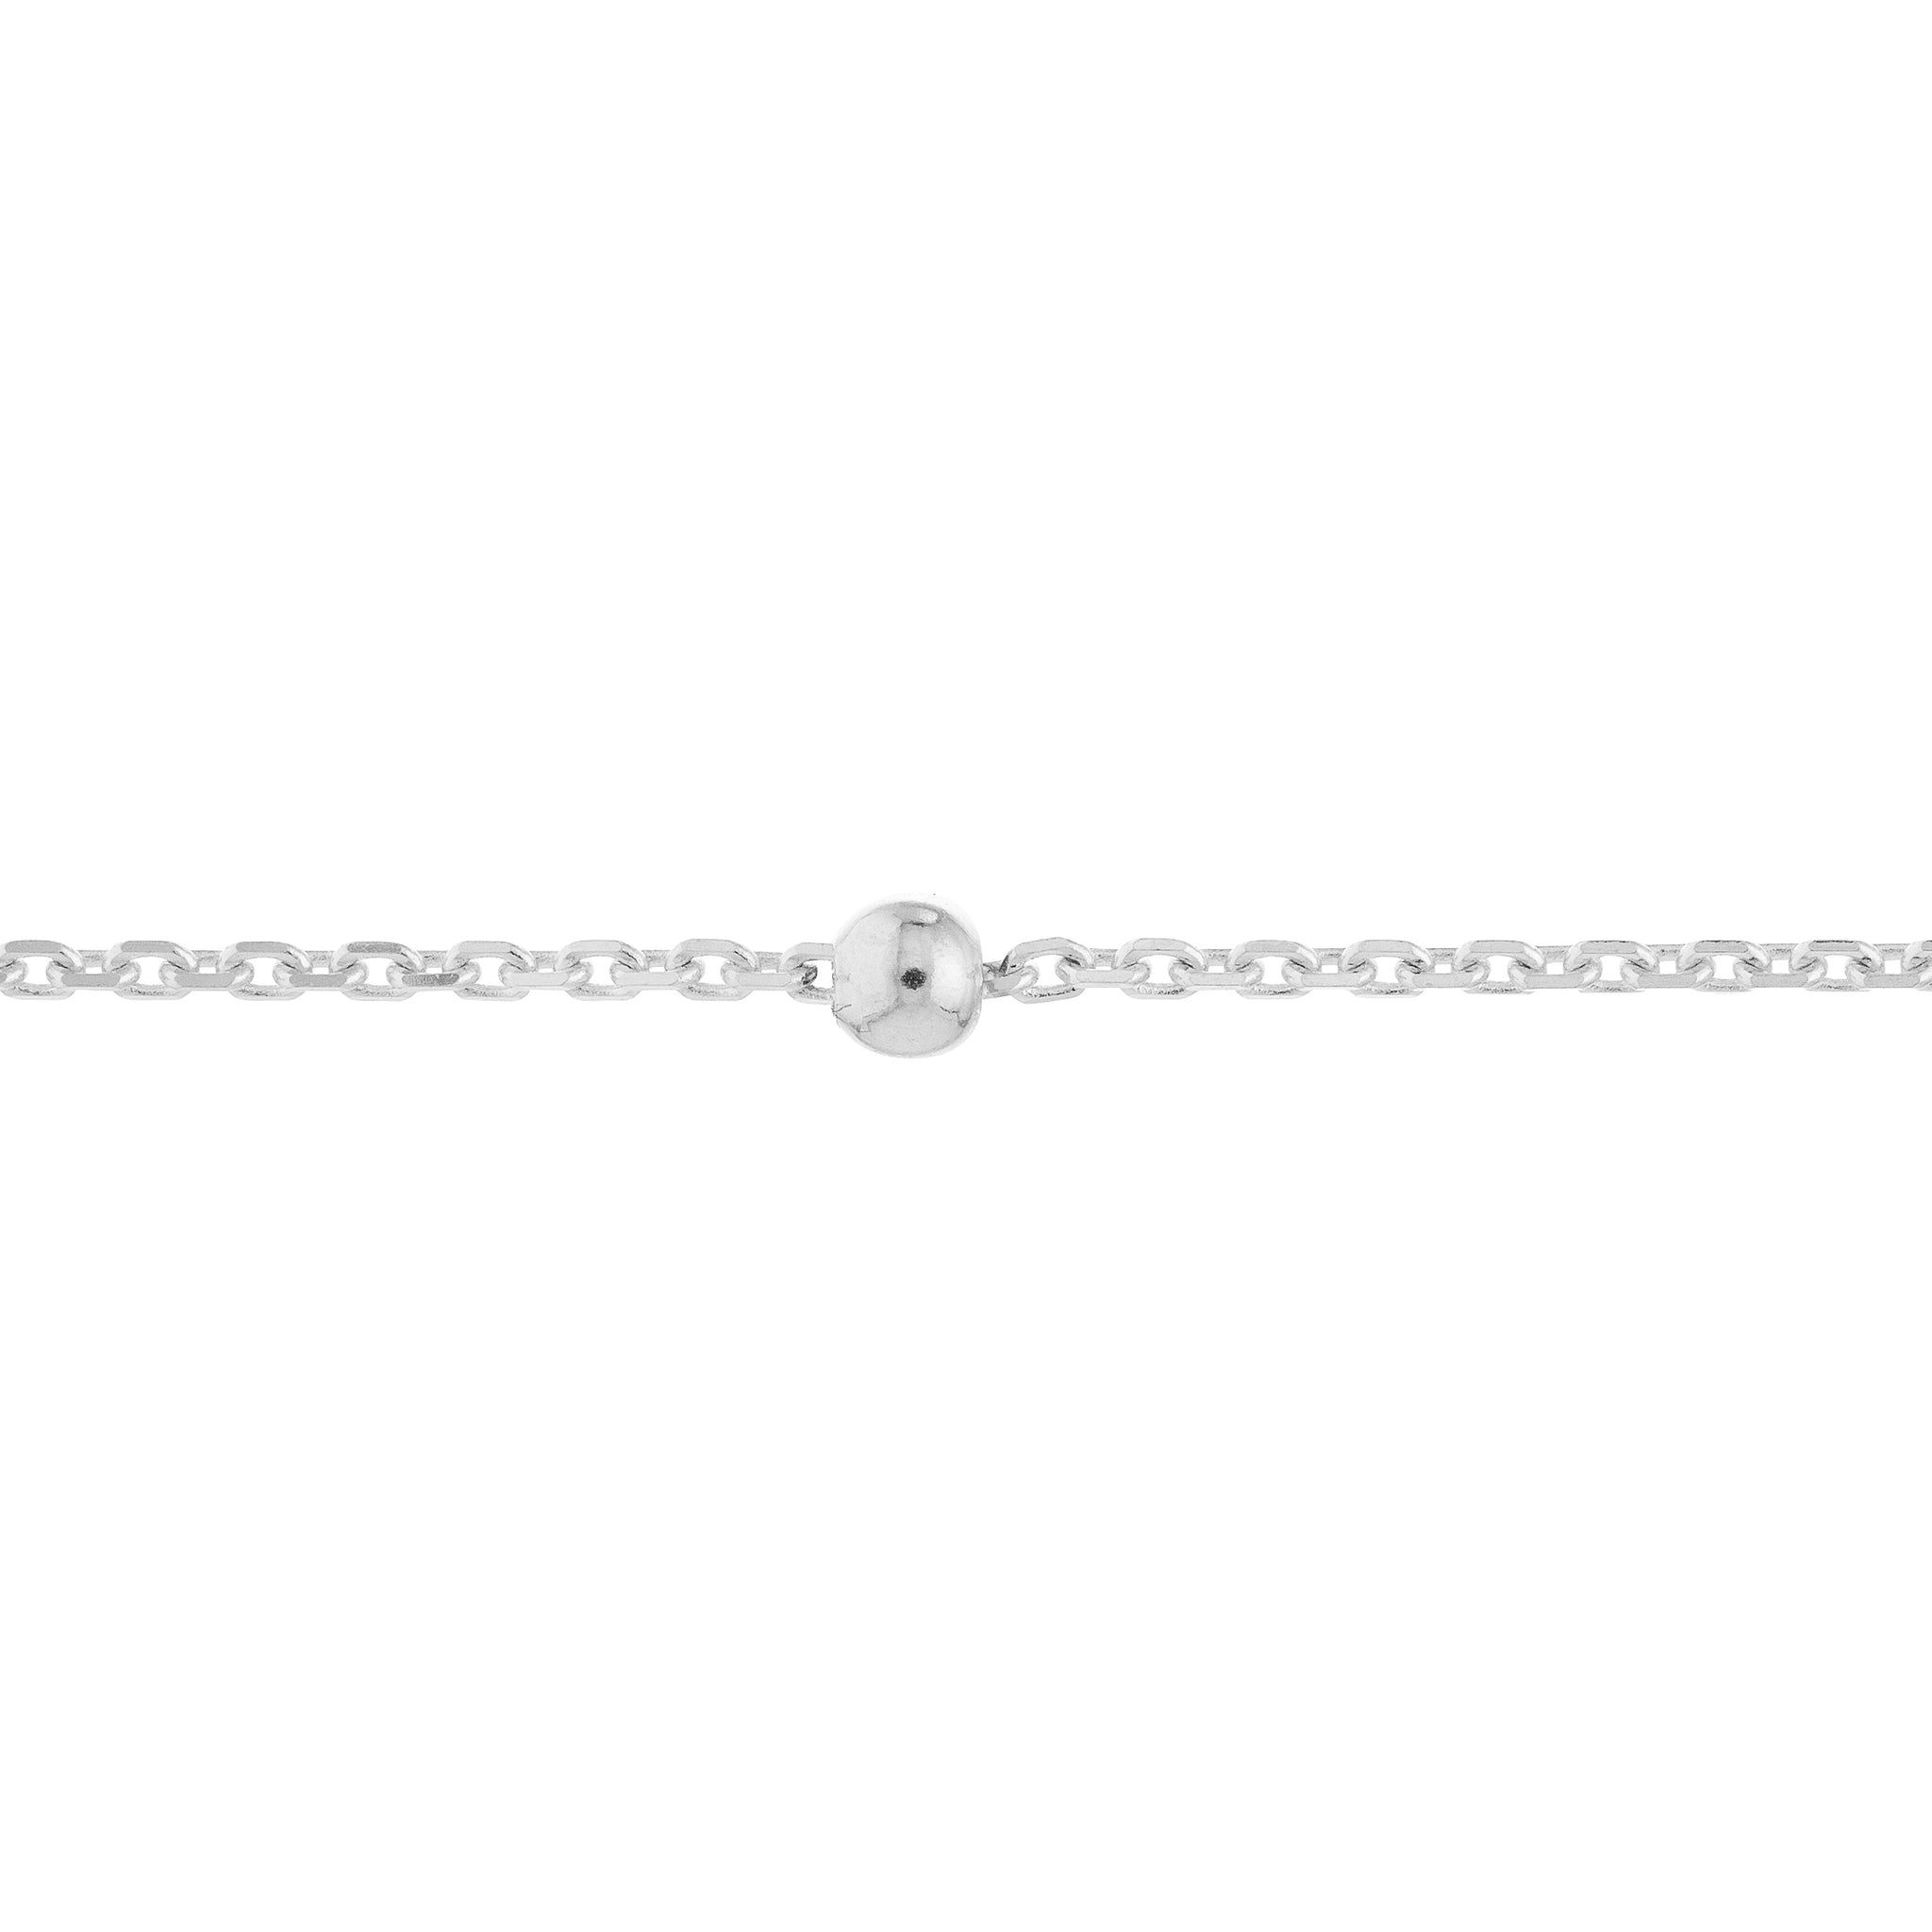 Collection Hemsleys 14K - Bracelet de perles à la verge